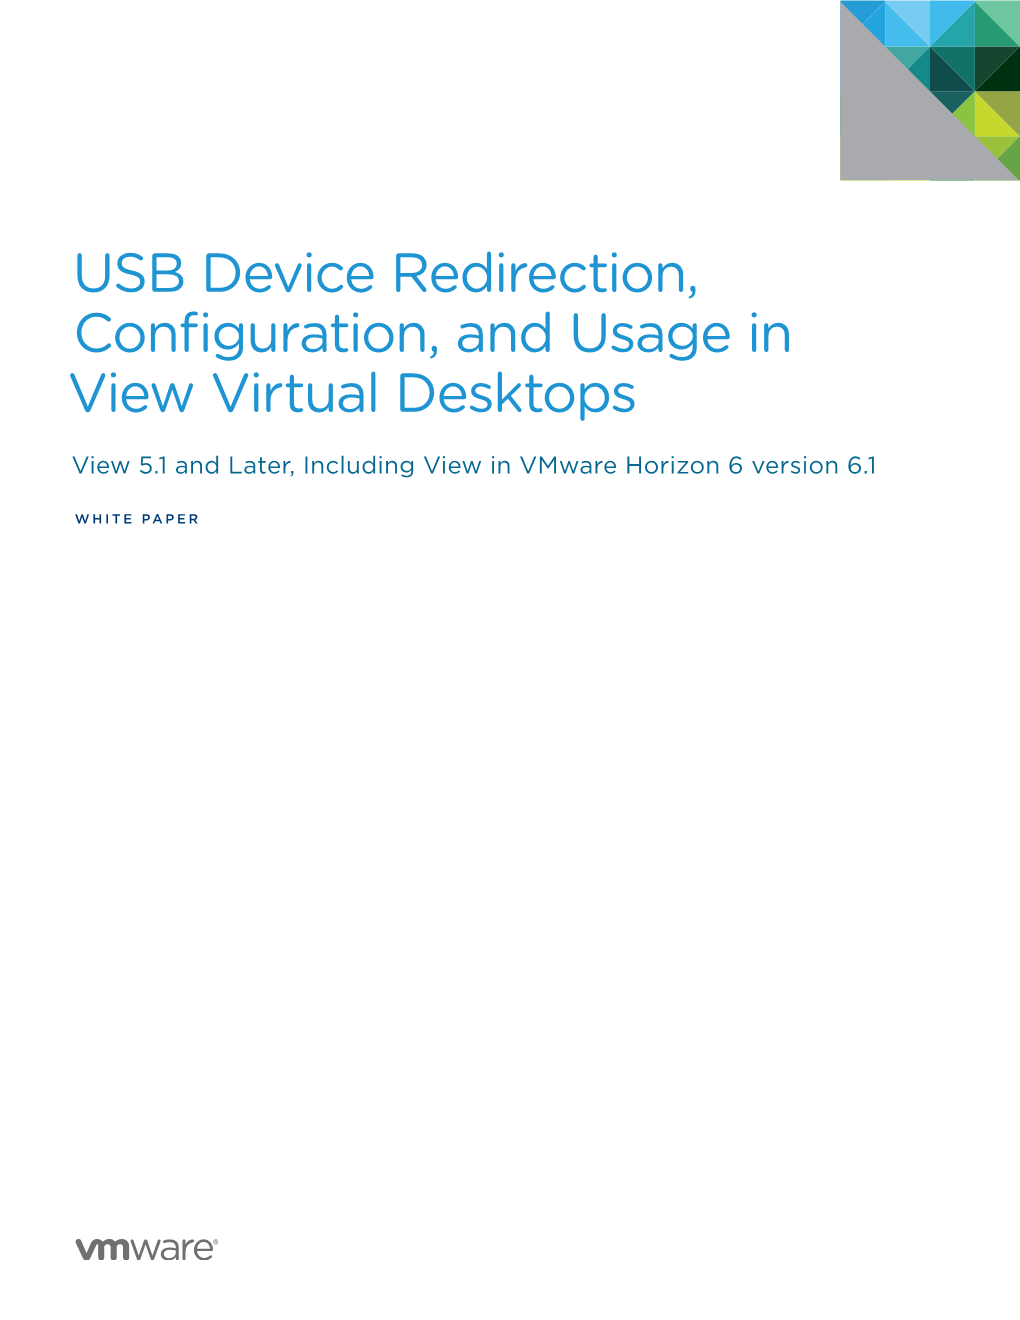 USB Device Redirection in View Virtual Desktops